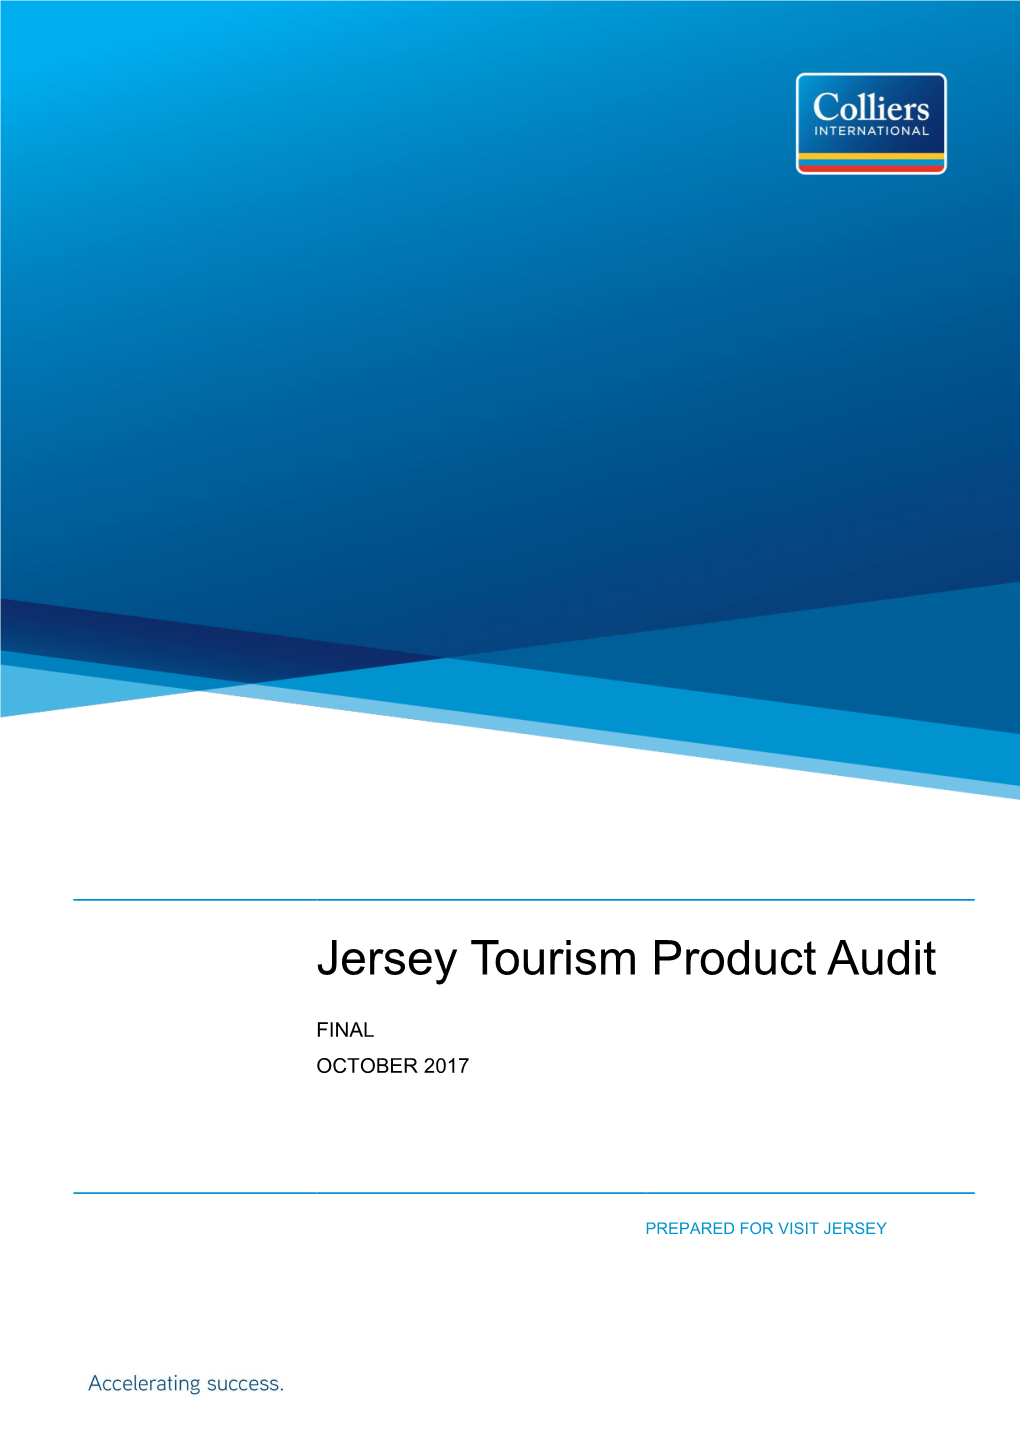 Jersey Tourism Product Audit